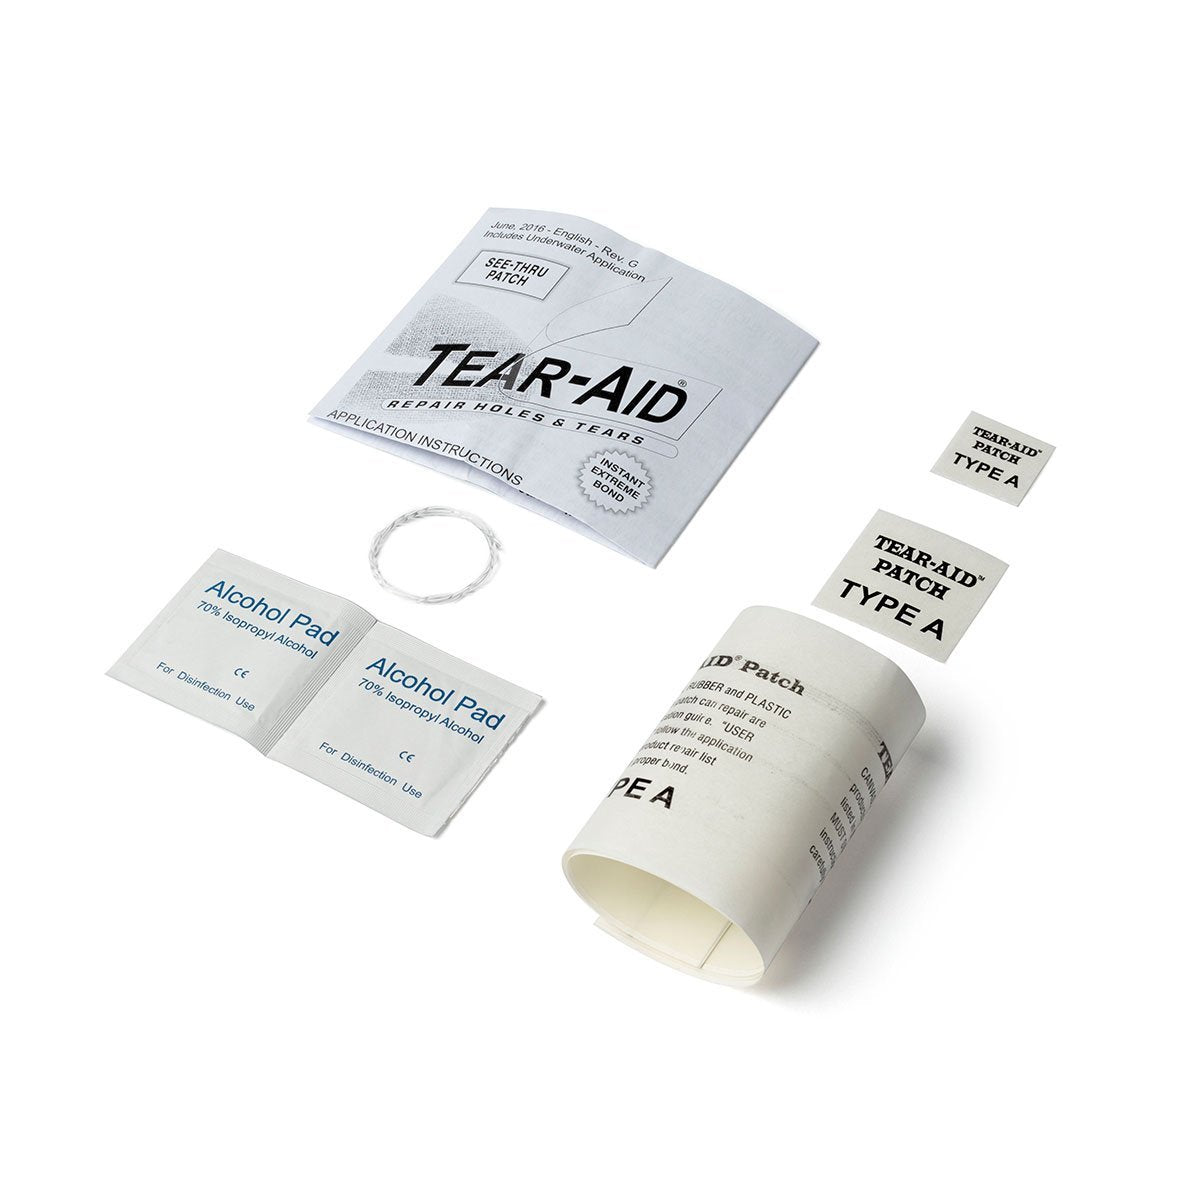 Tear-Aid Dry Bag Patch Kit - Mosko Moto